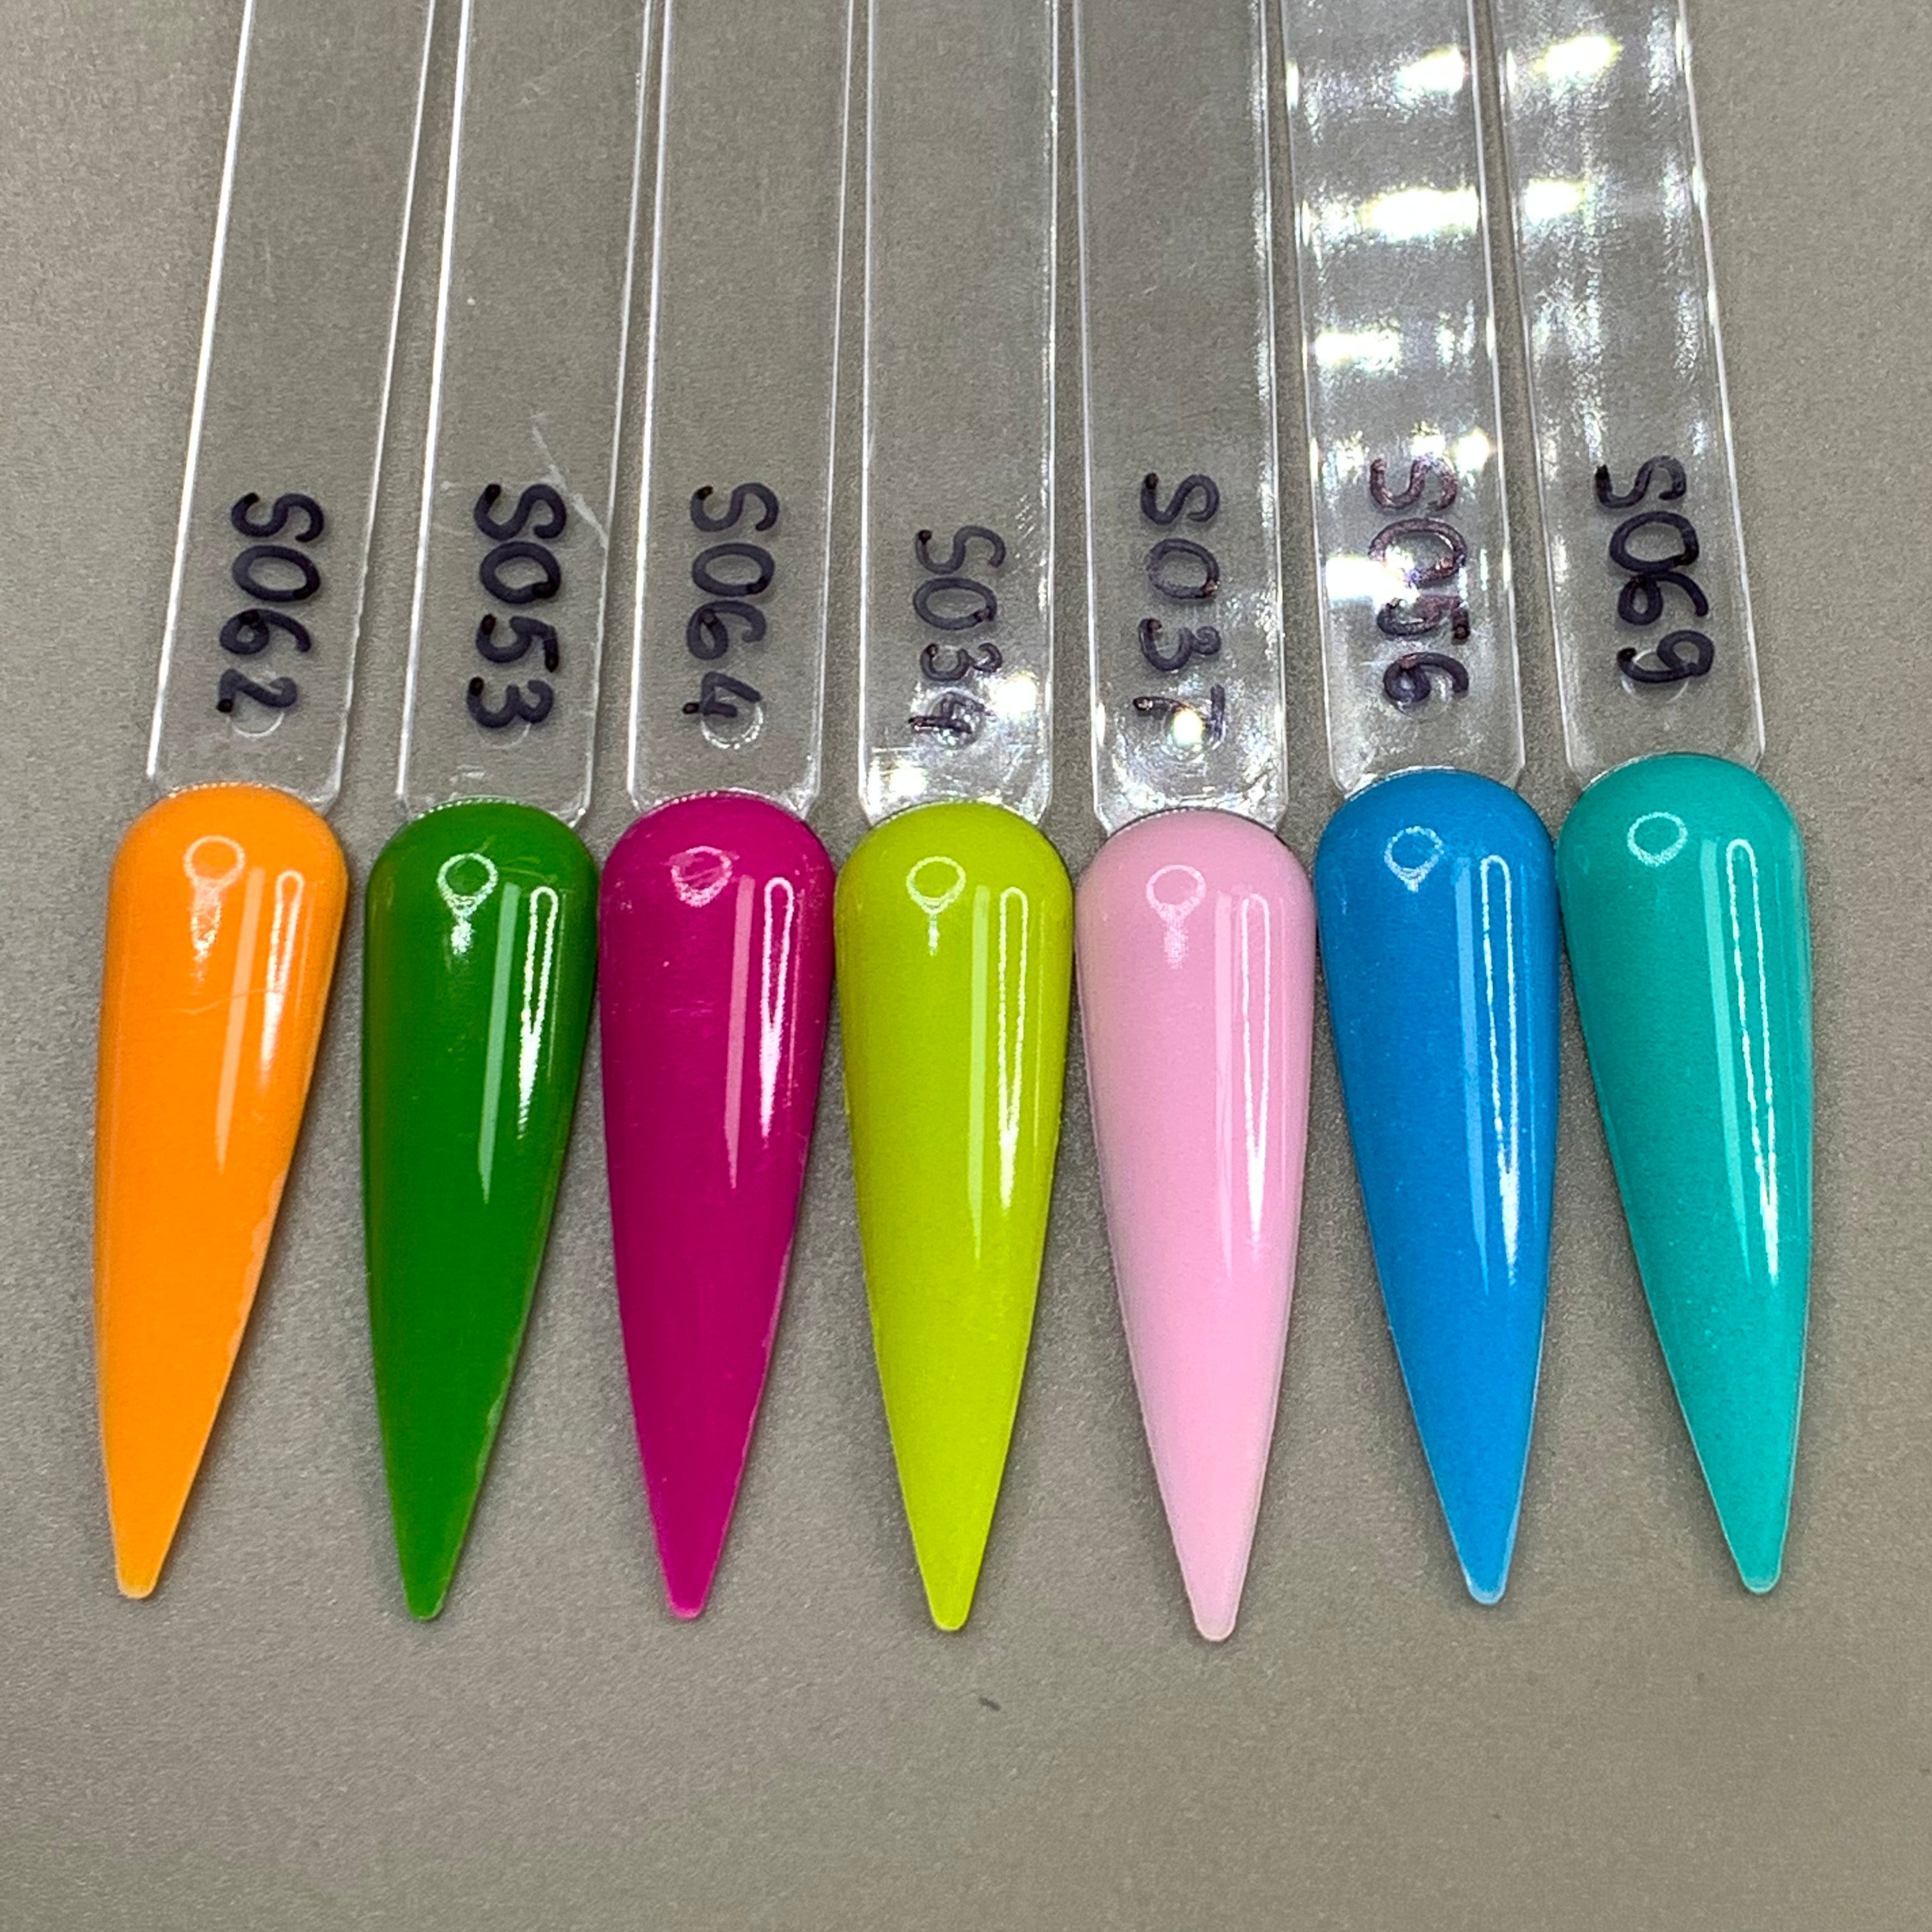 Iridescent and Shifting Color Random Shape Glitter Acrylic 2-in-1 Nail –  Dynamic Nail Supply